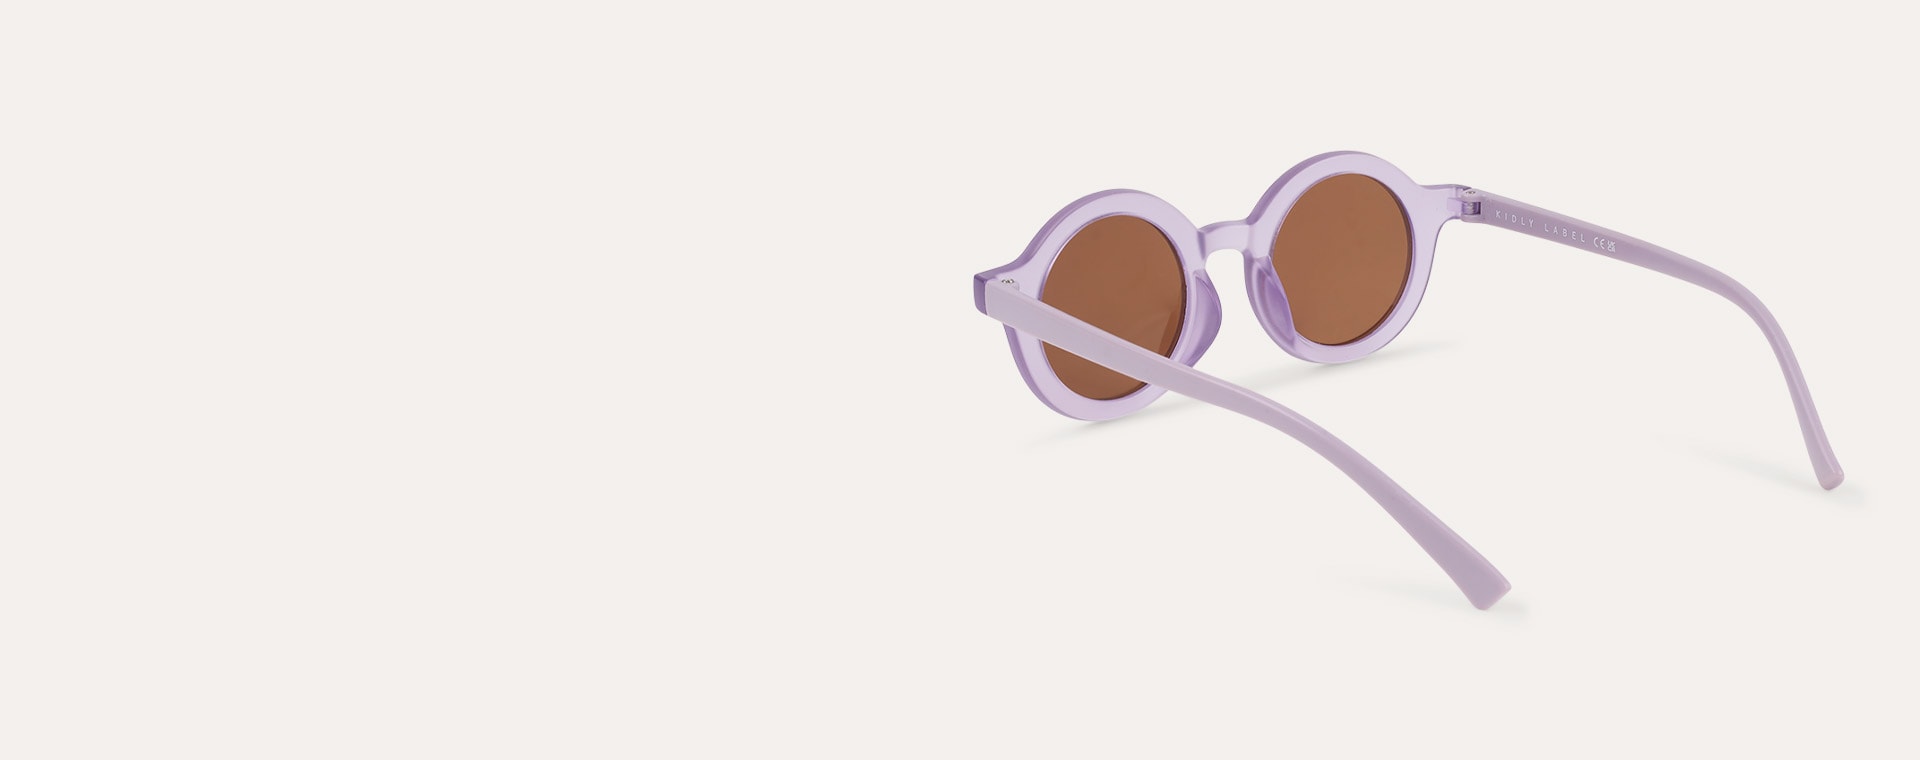 Mauve KIDLY Label Round Sustainable Sunglasses